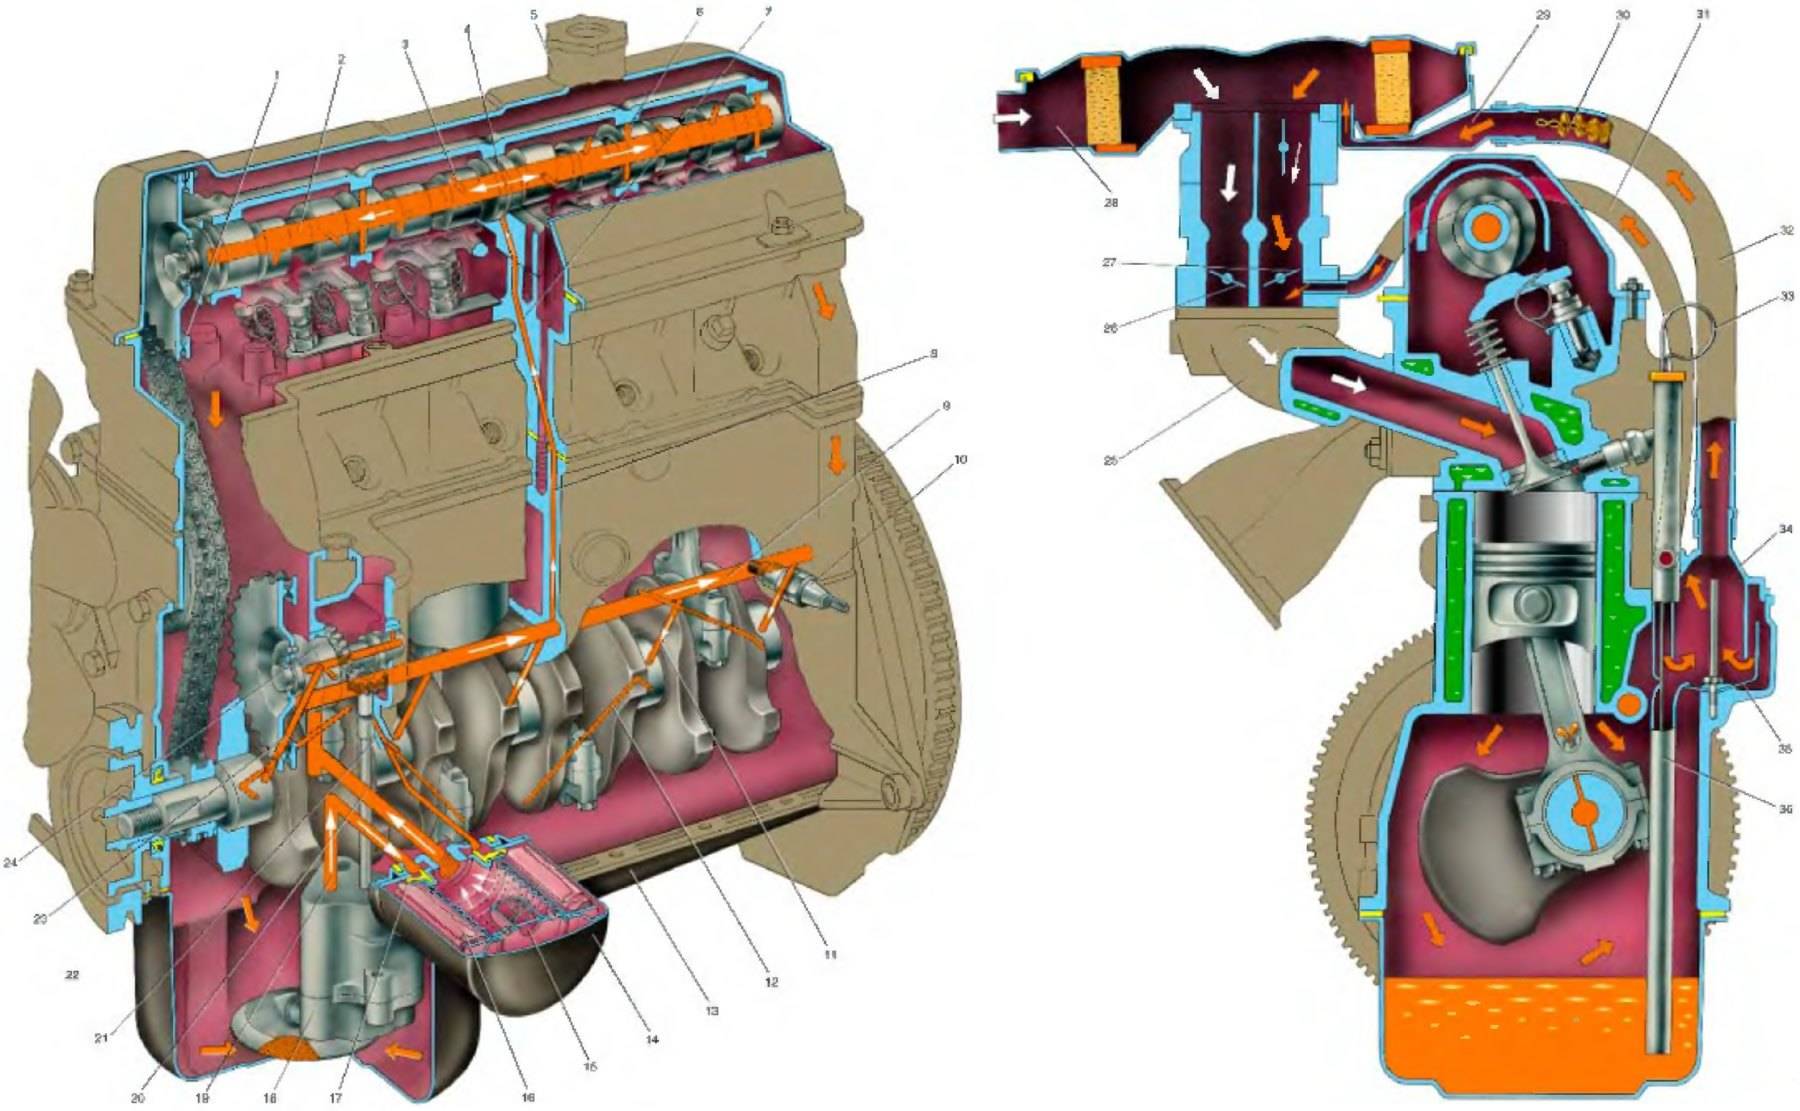 Система смазки двигателя автомобиля : устройство и назначение